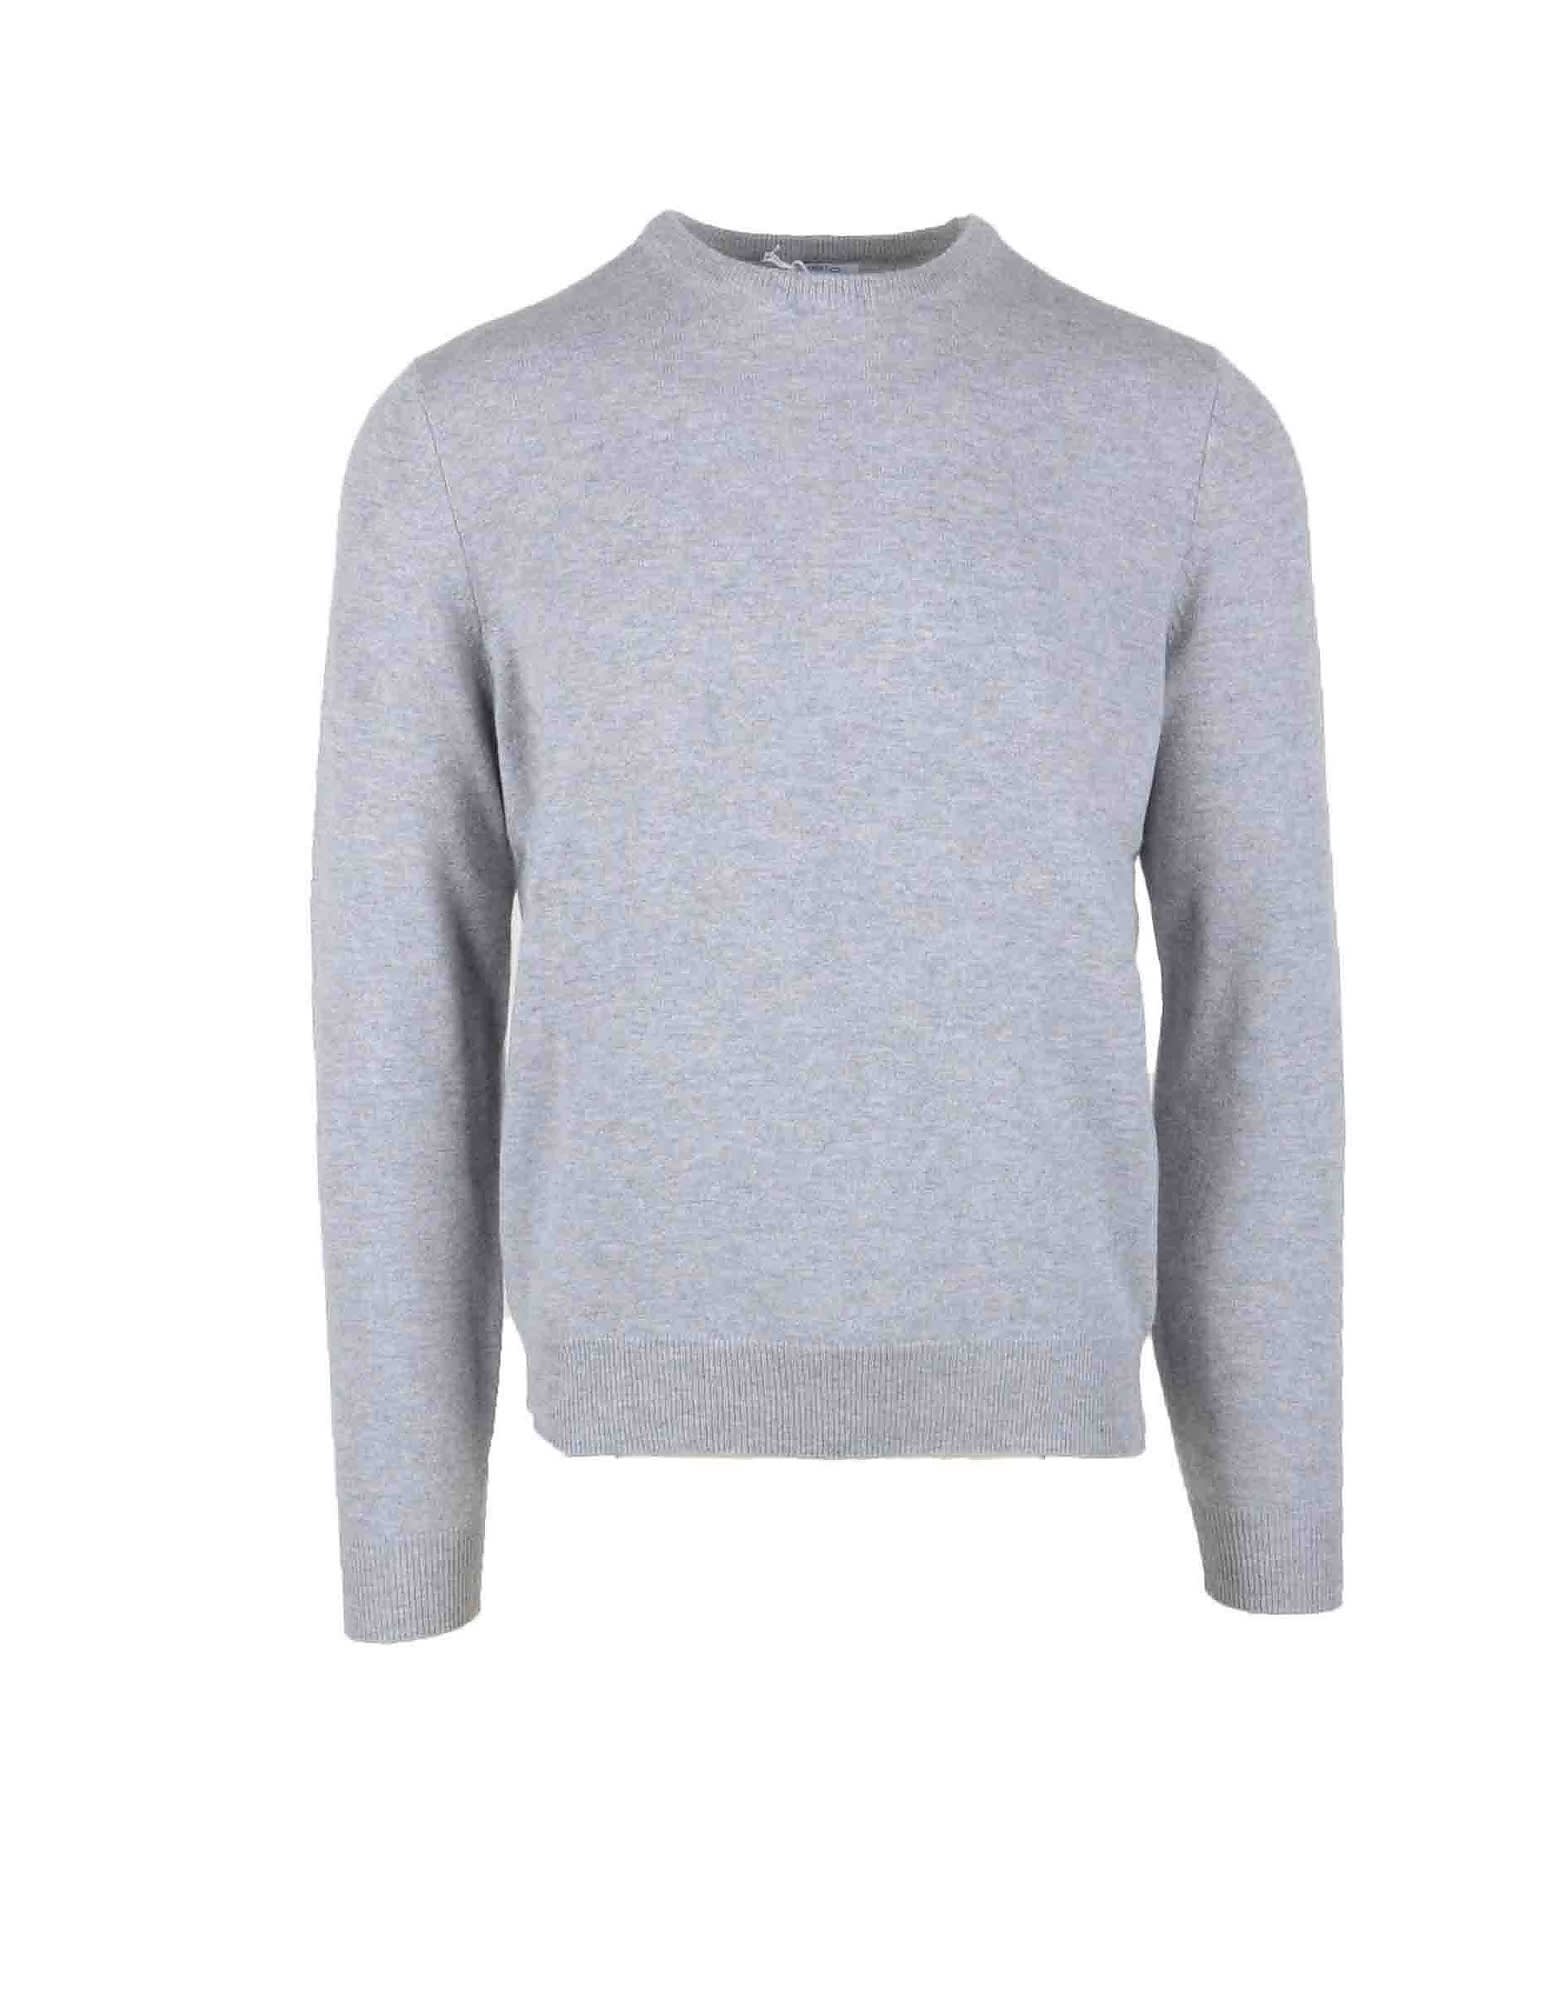 Mens Gray Sweater